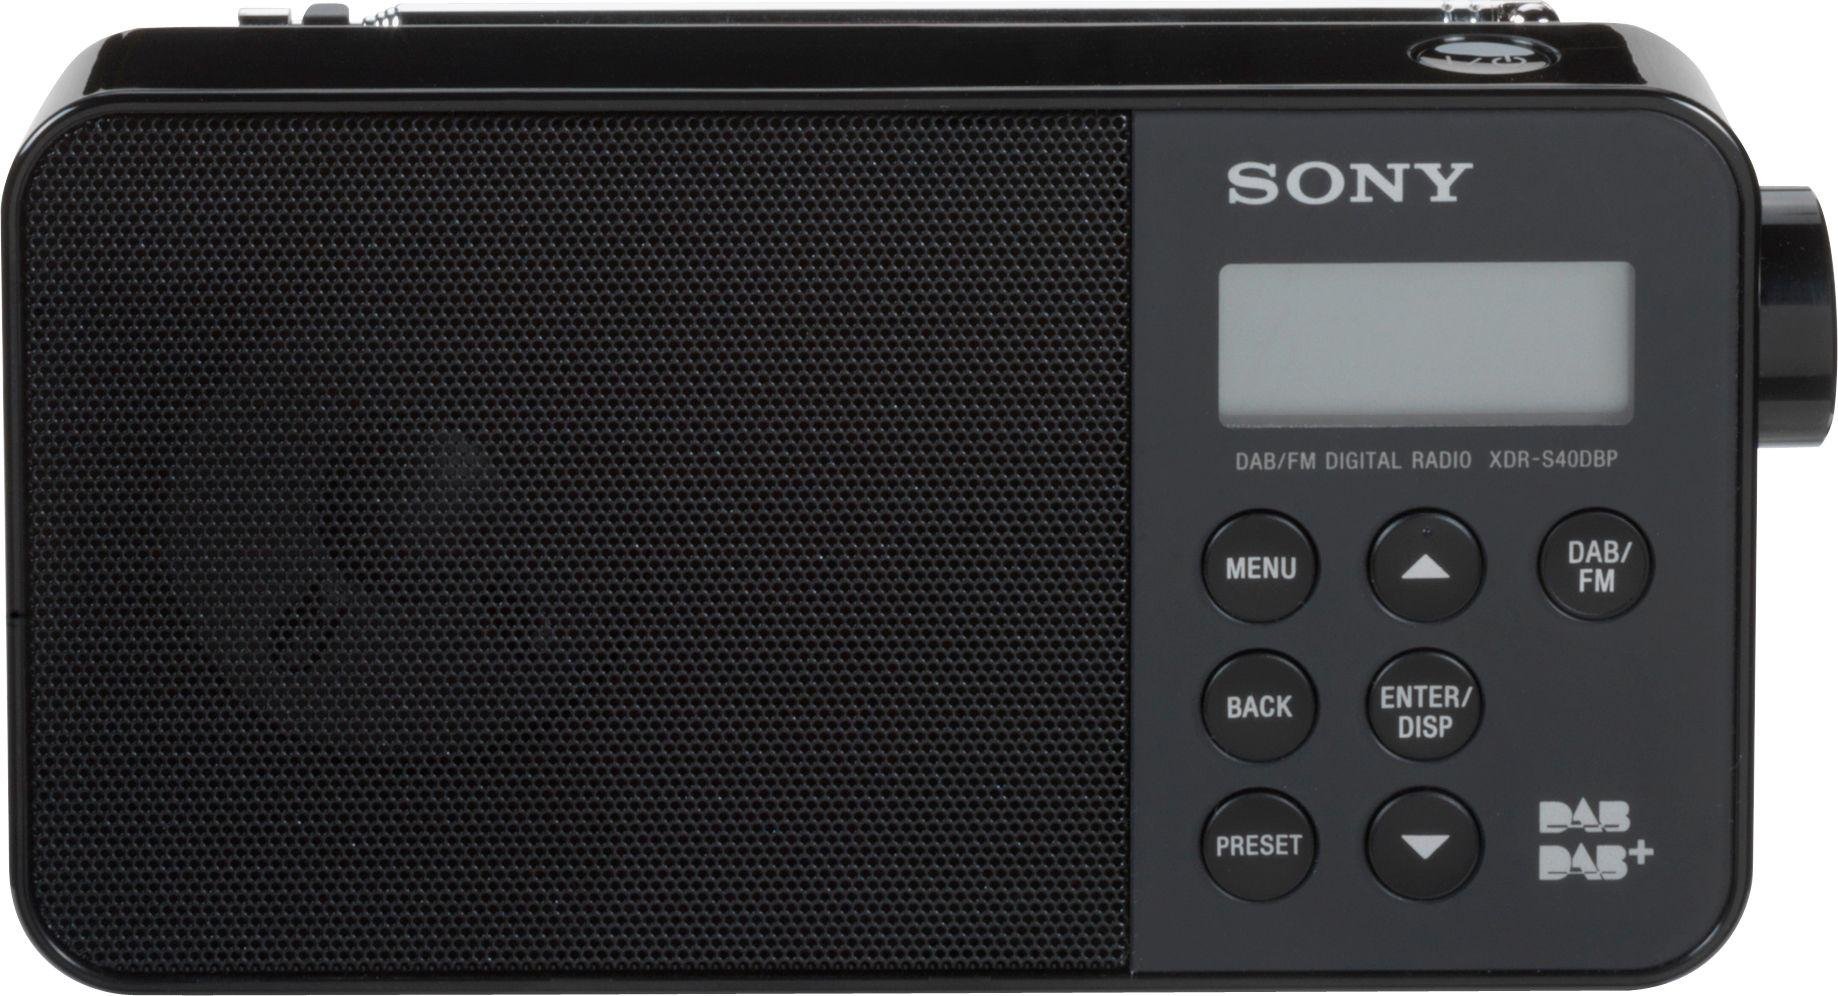 Sony XDRS40 DAB Radio - Black